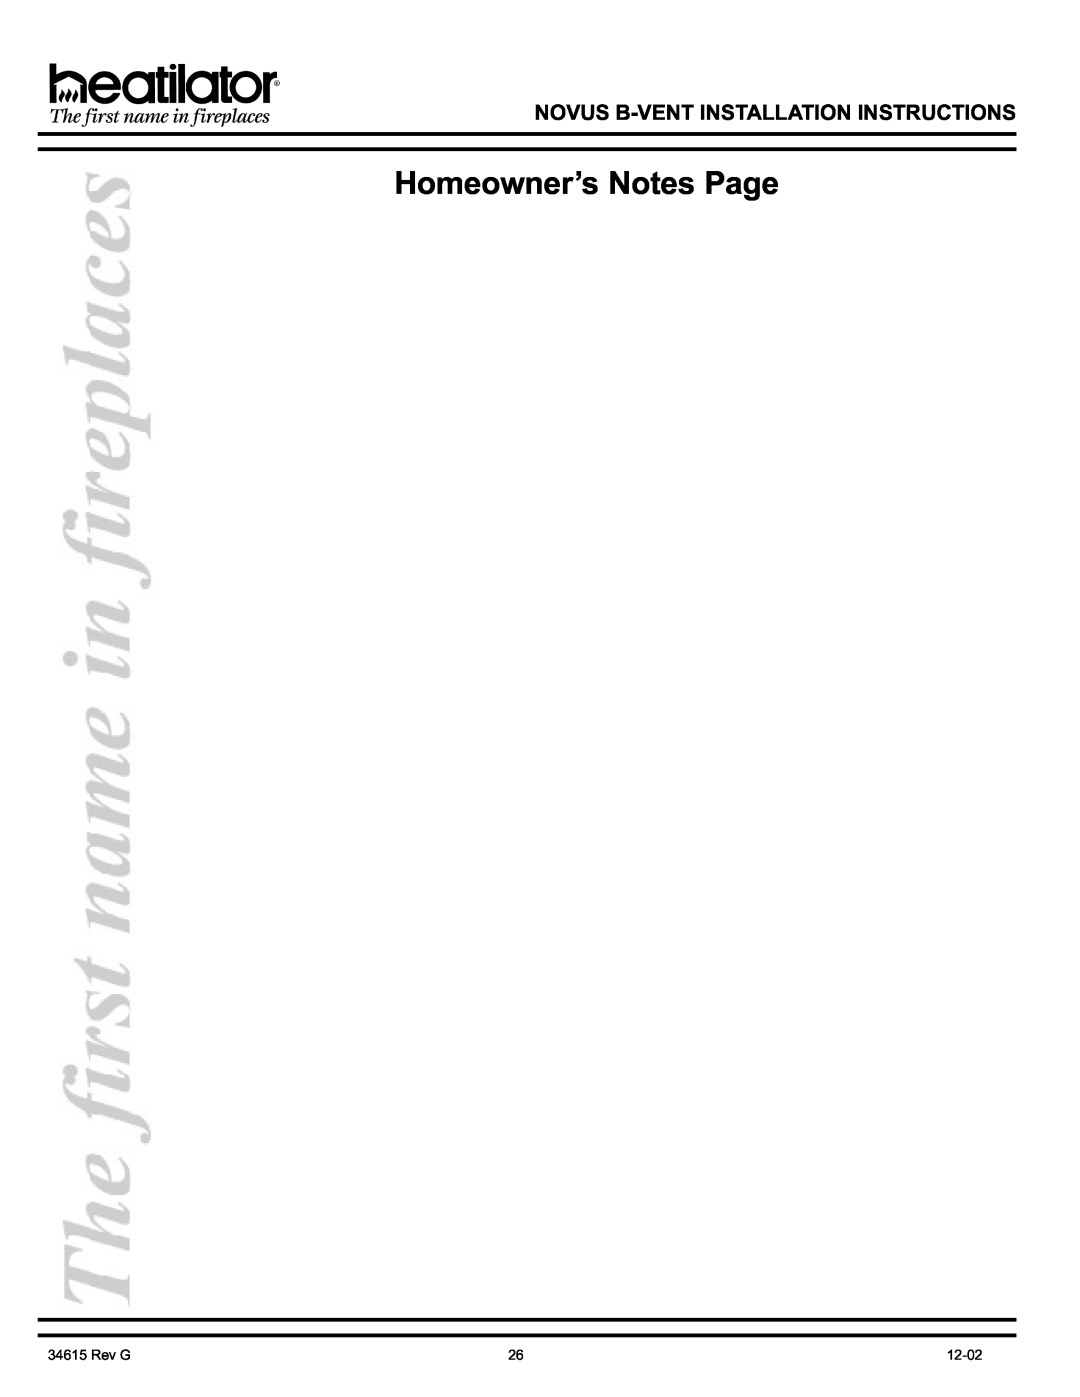 Hearth and Home Technologies GNBC33, GNBC30 Homeowner’s Notes Page, Novus B-Ventinstallation Instructions, Rev G, 12-02 